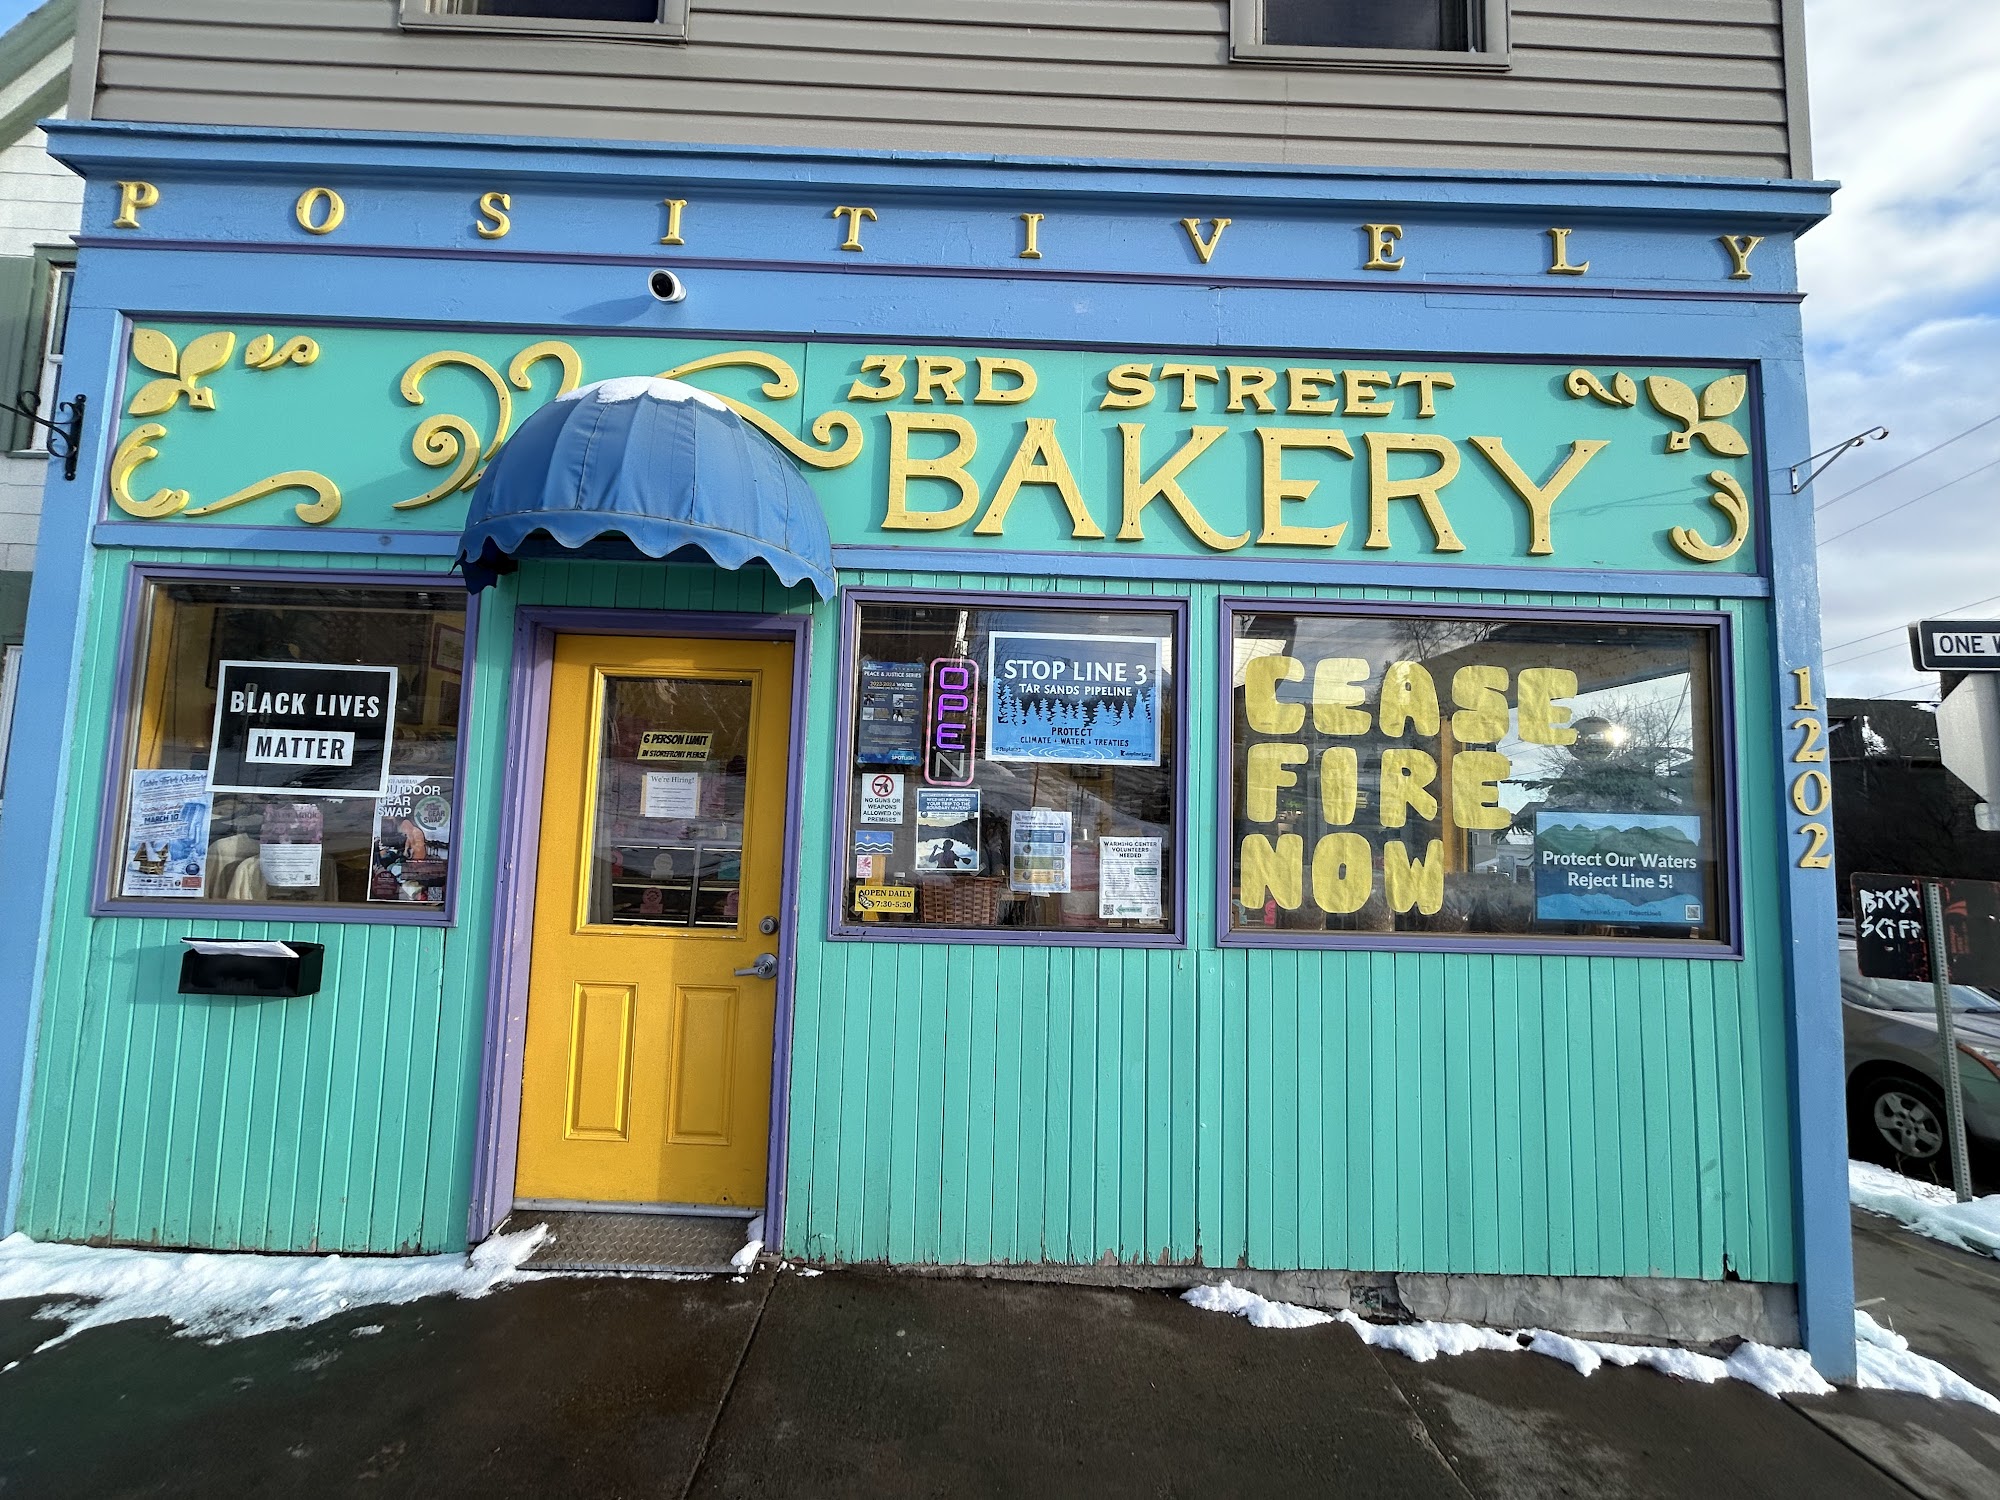 Positively 3rd Street Bakery